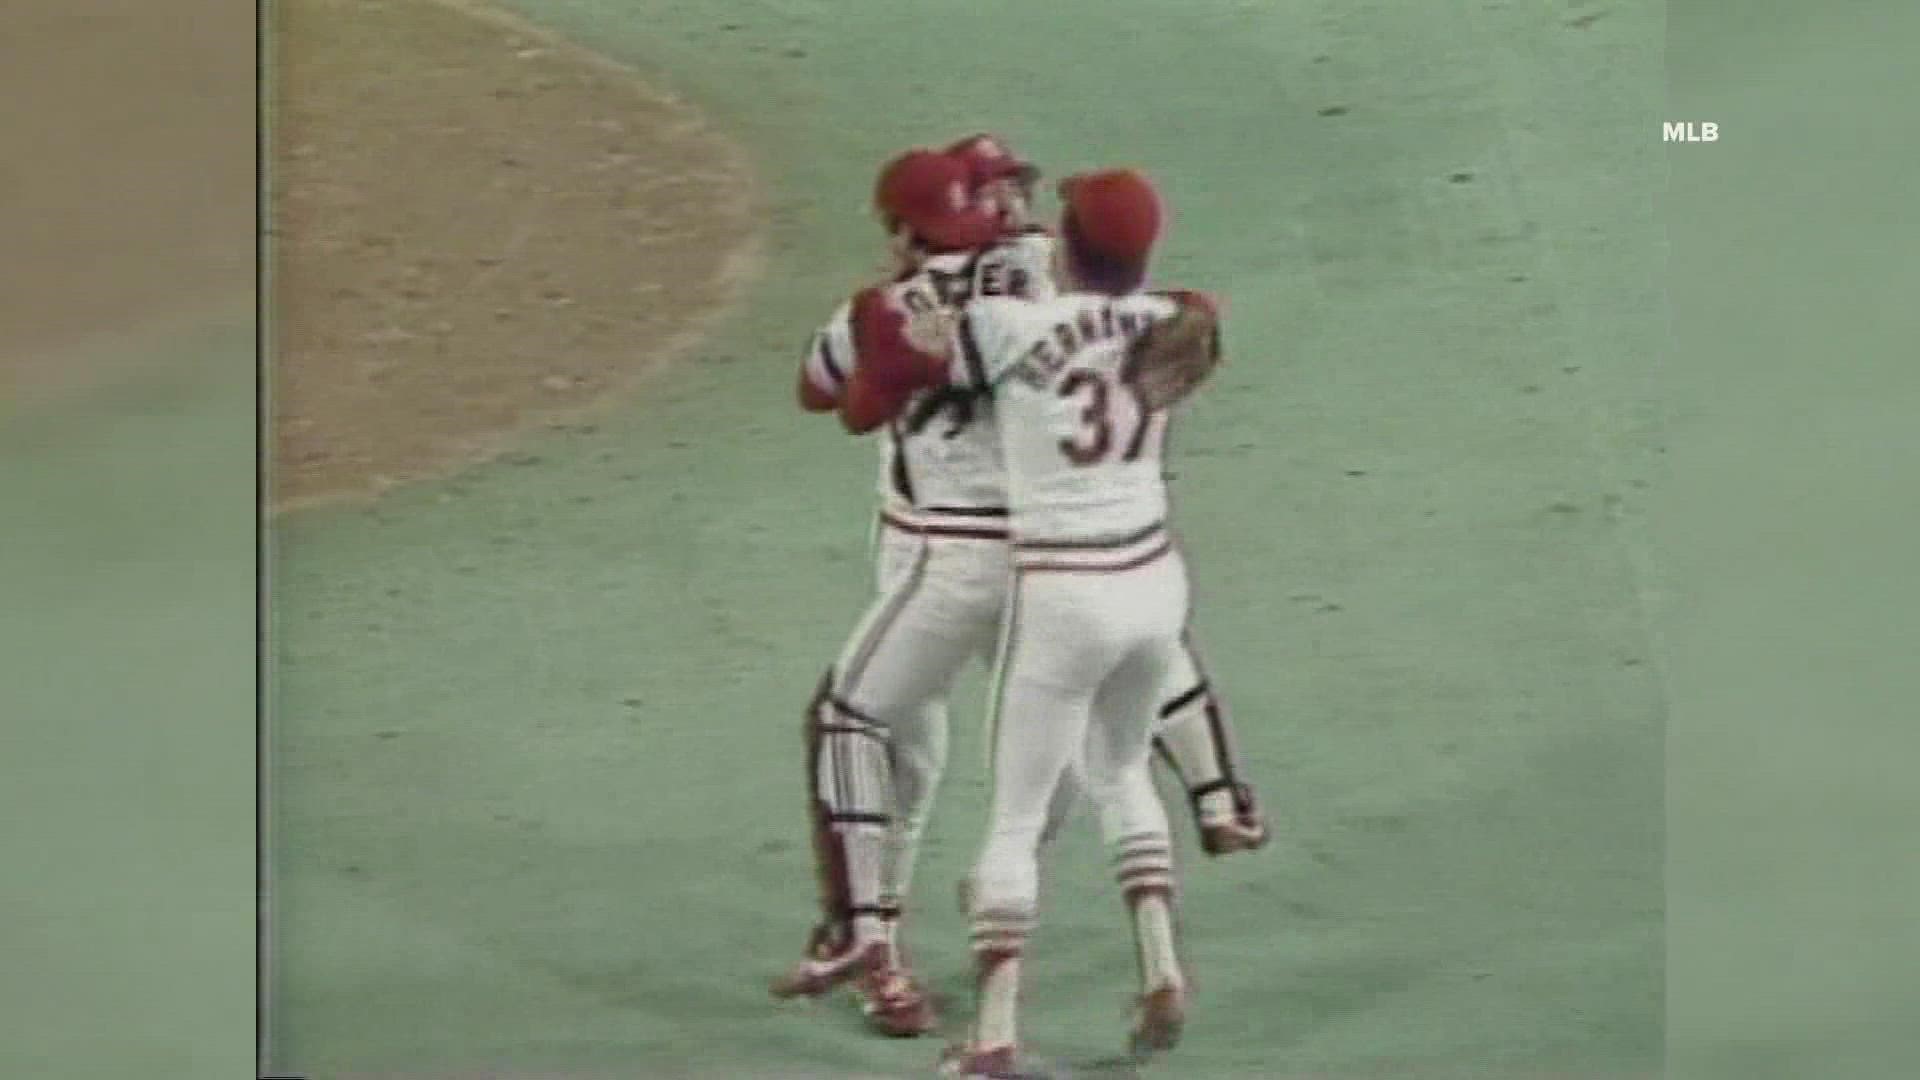 St. Louis Cardinals 1982 World Series Champs